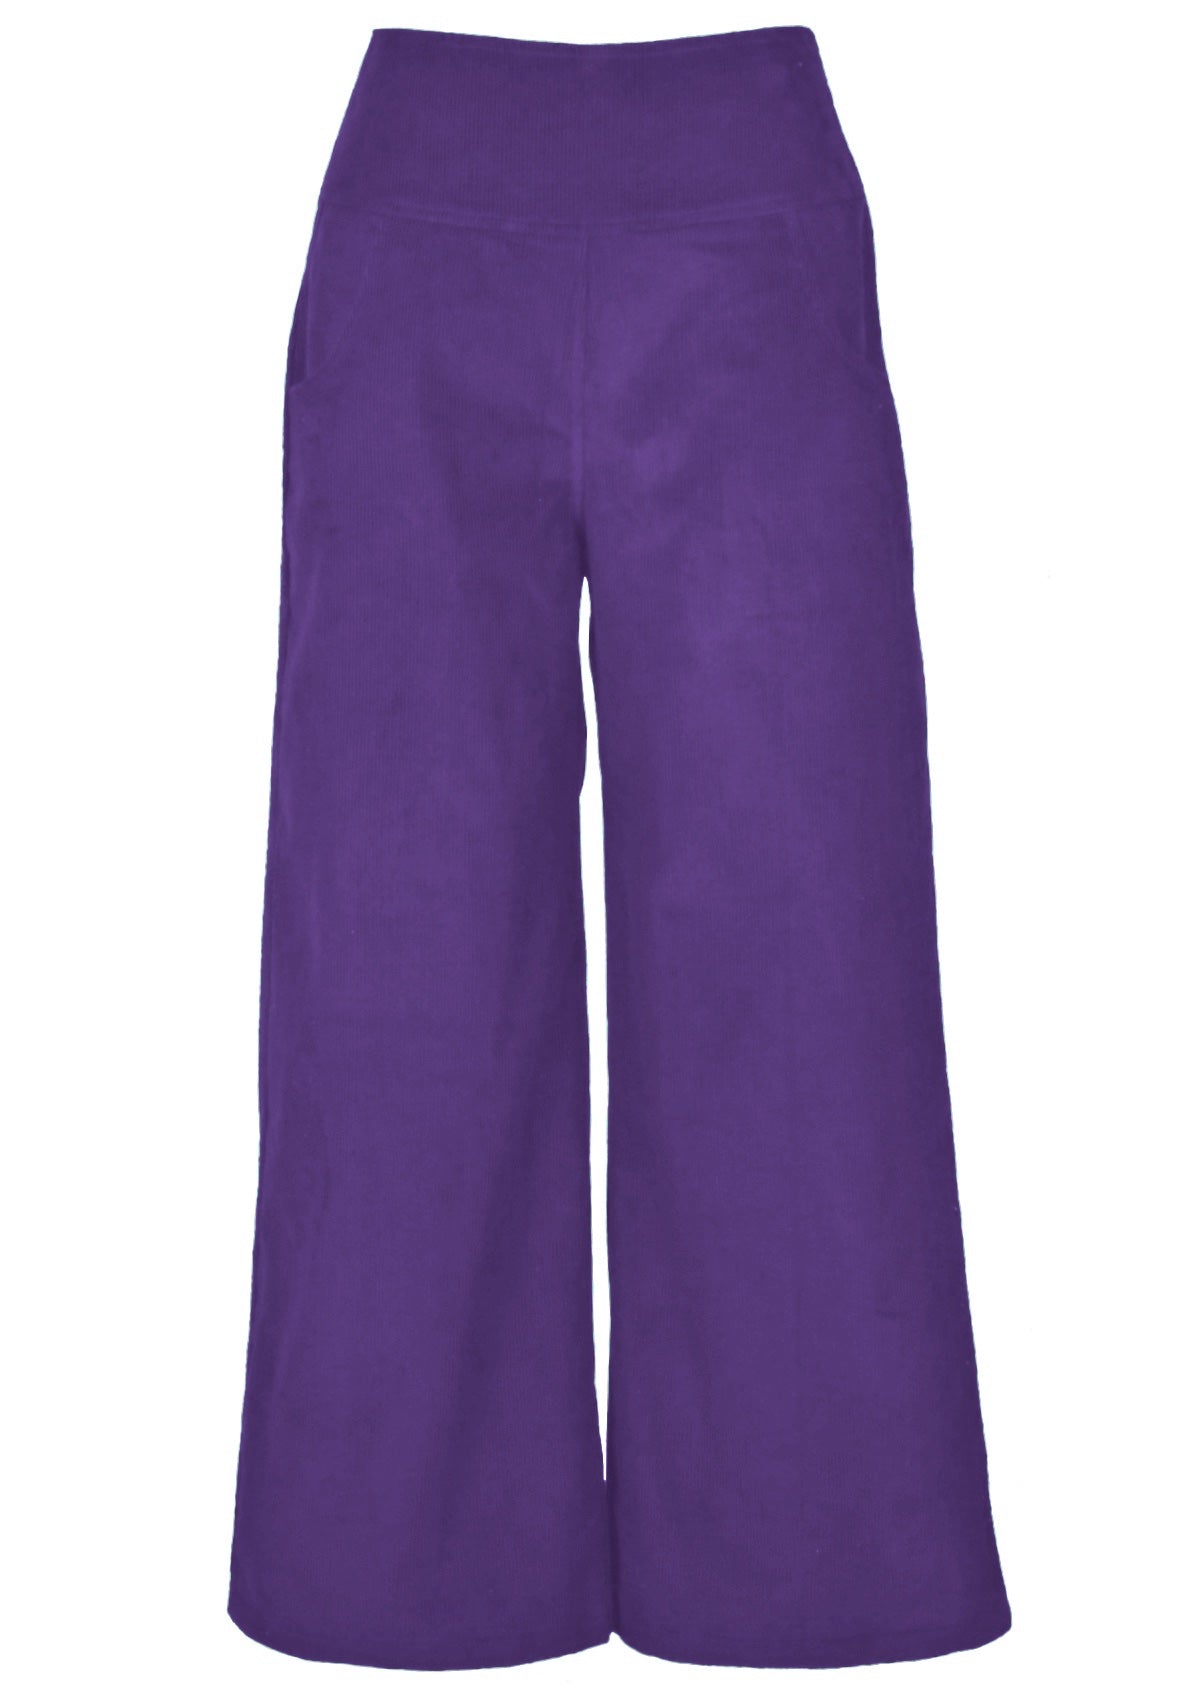 Bold purple 100% cotton corduroy pants with a chic wide leg. 